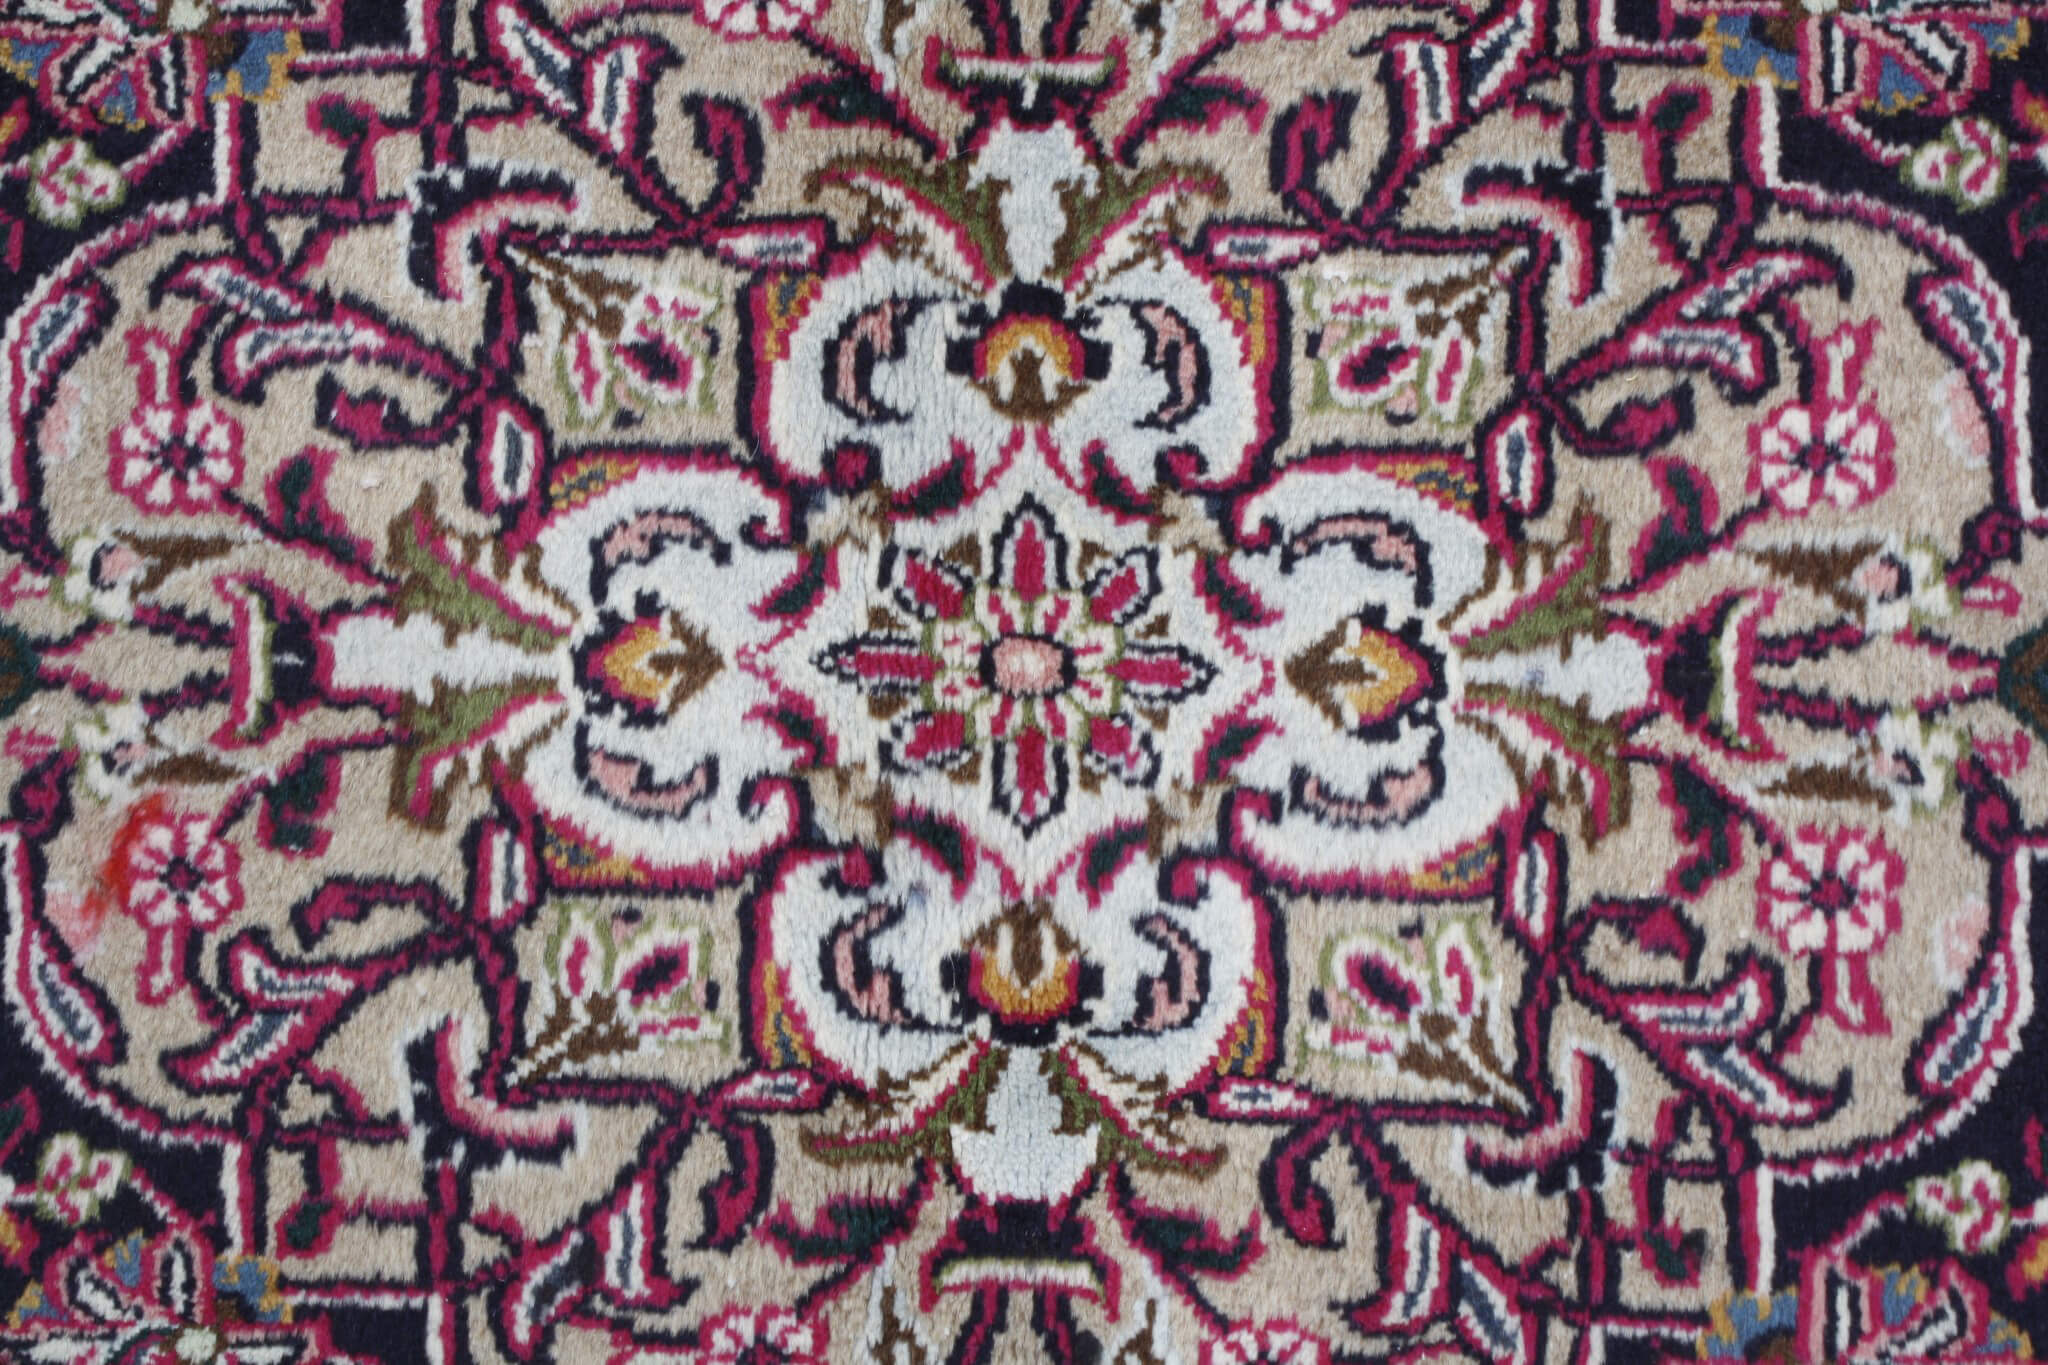 Persian rug Kashmar